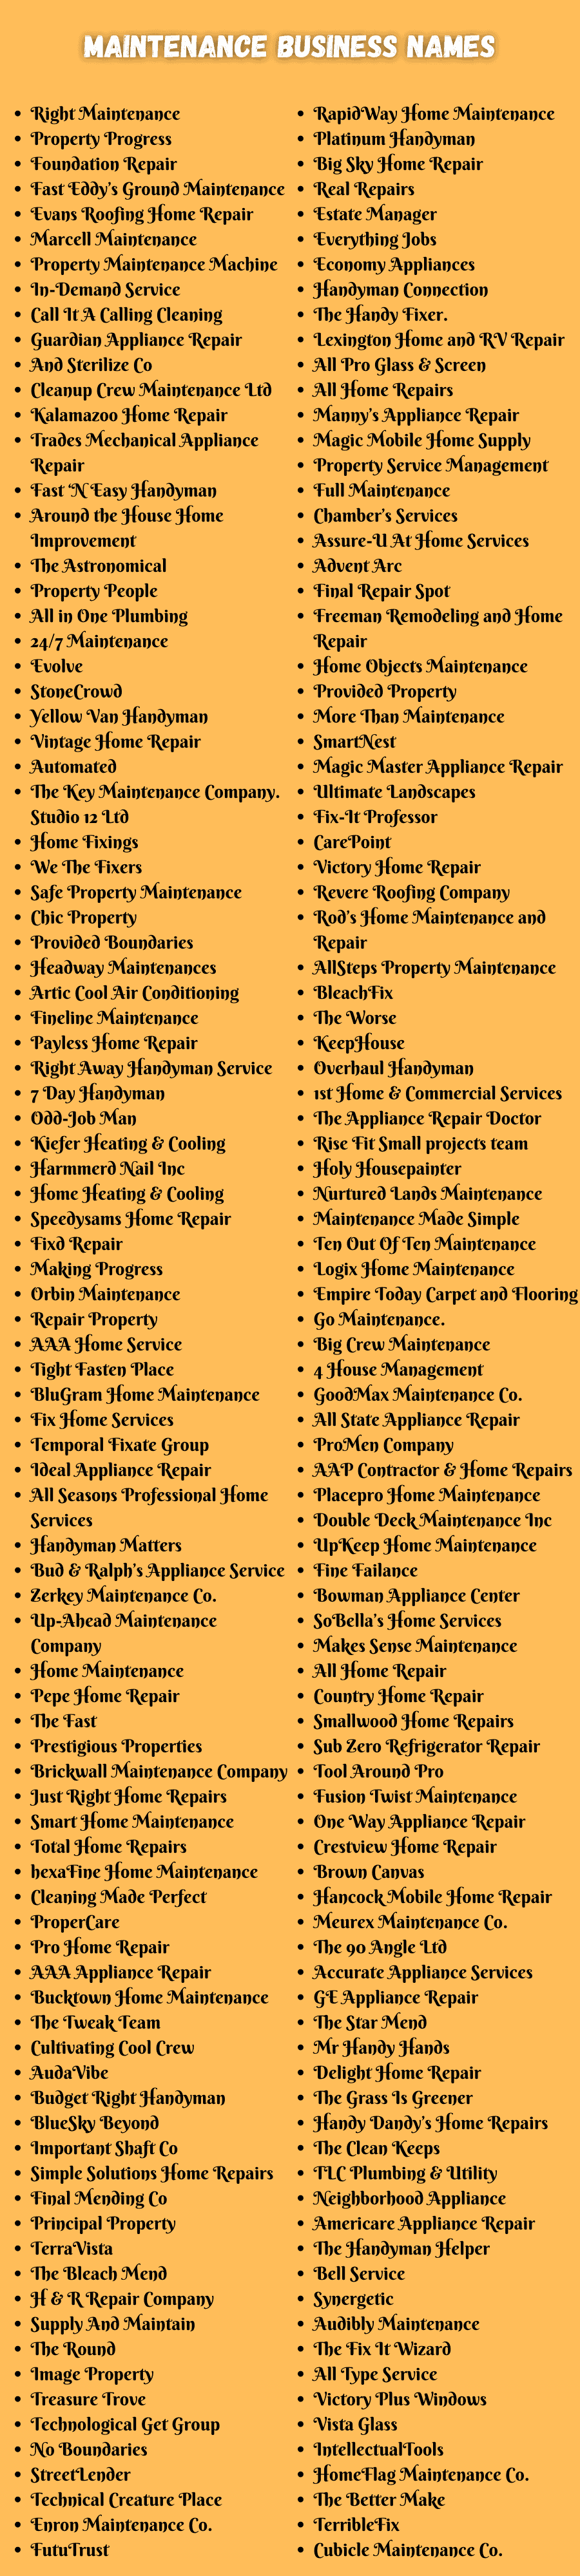 Maintenance Business Names